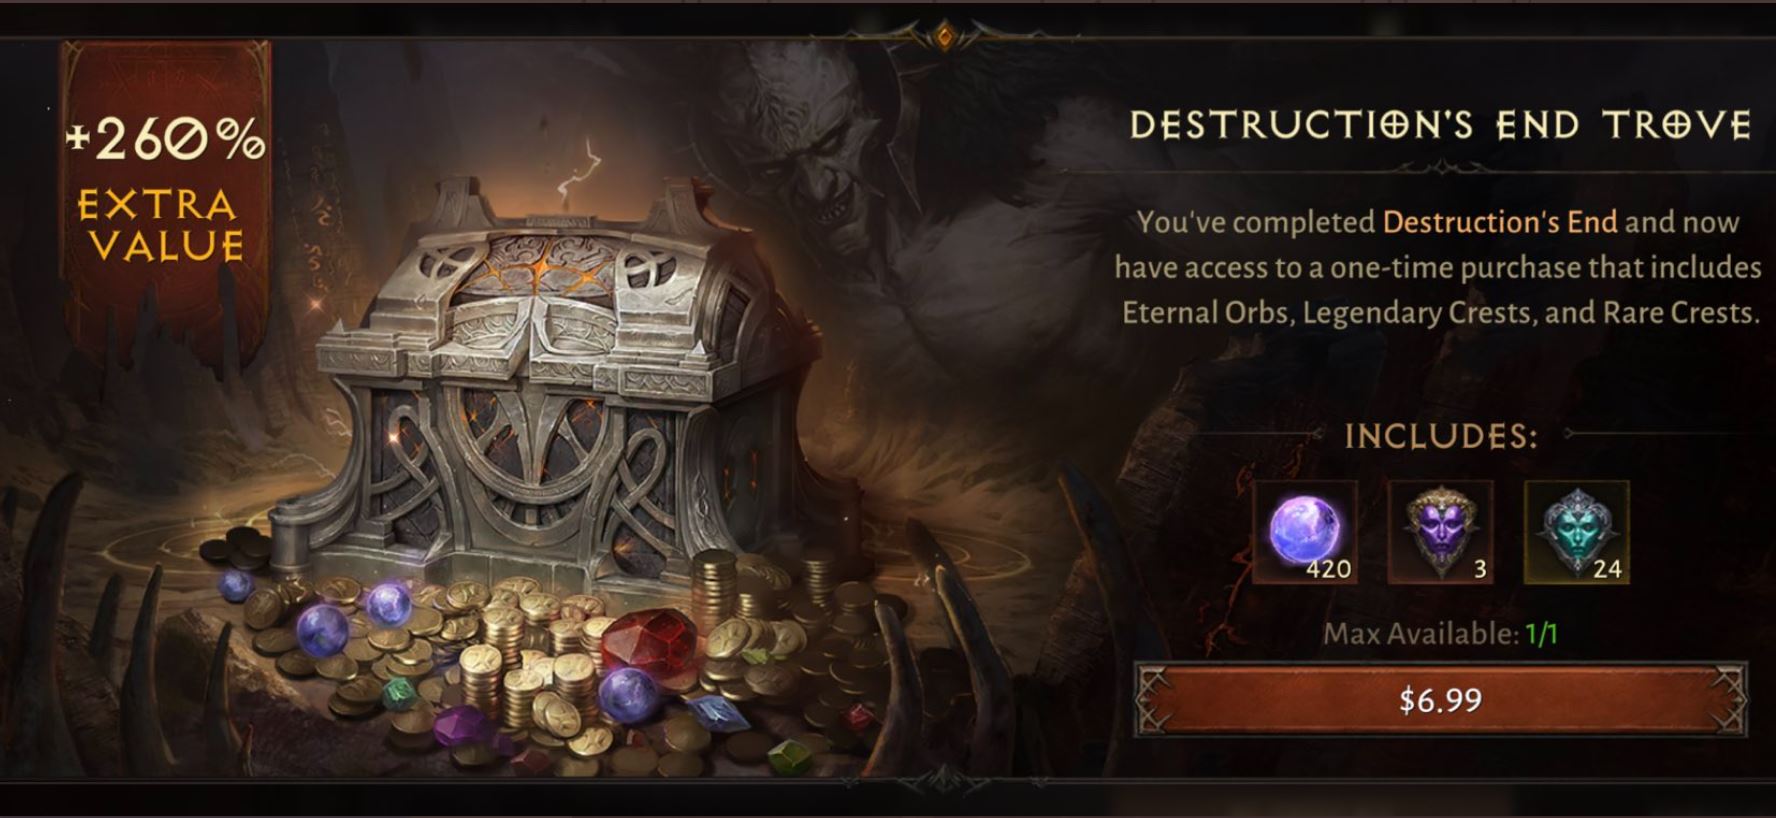 Diablo Immortal fan turns 600 million WoW gold into microtransactions